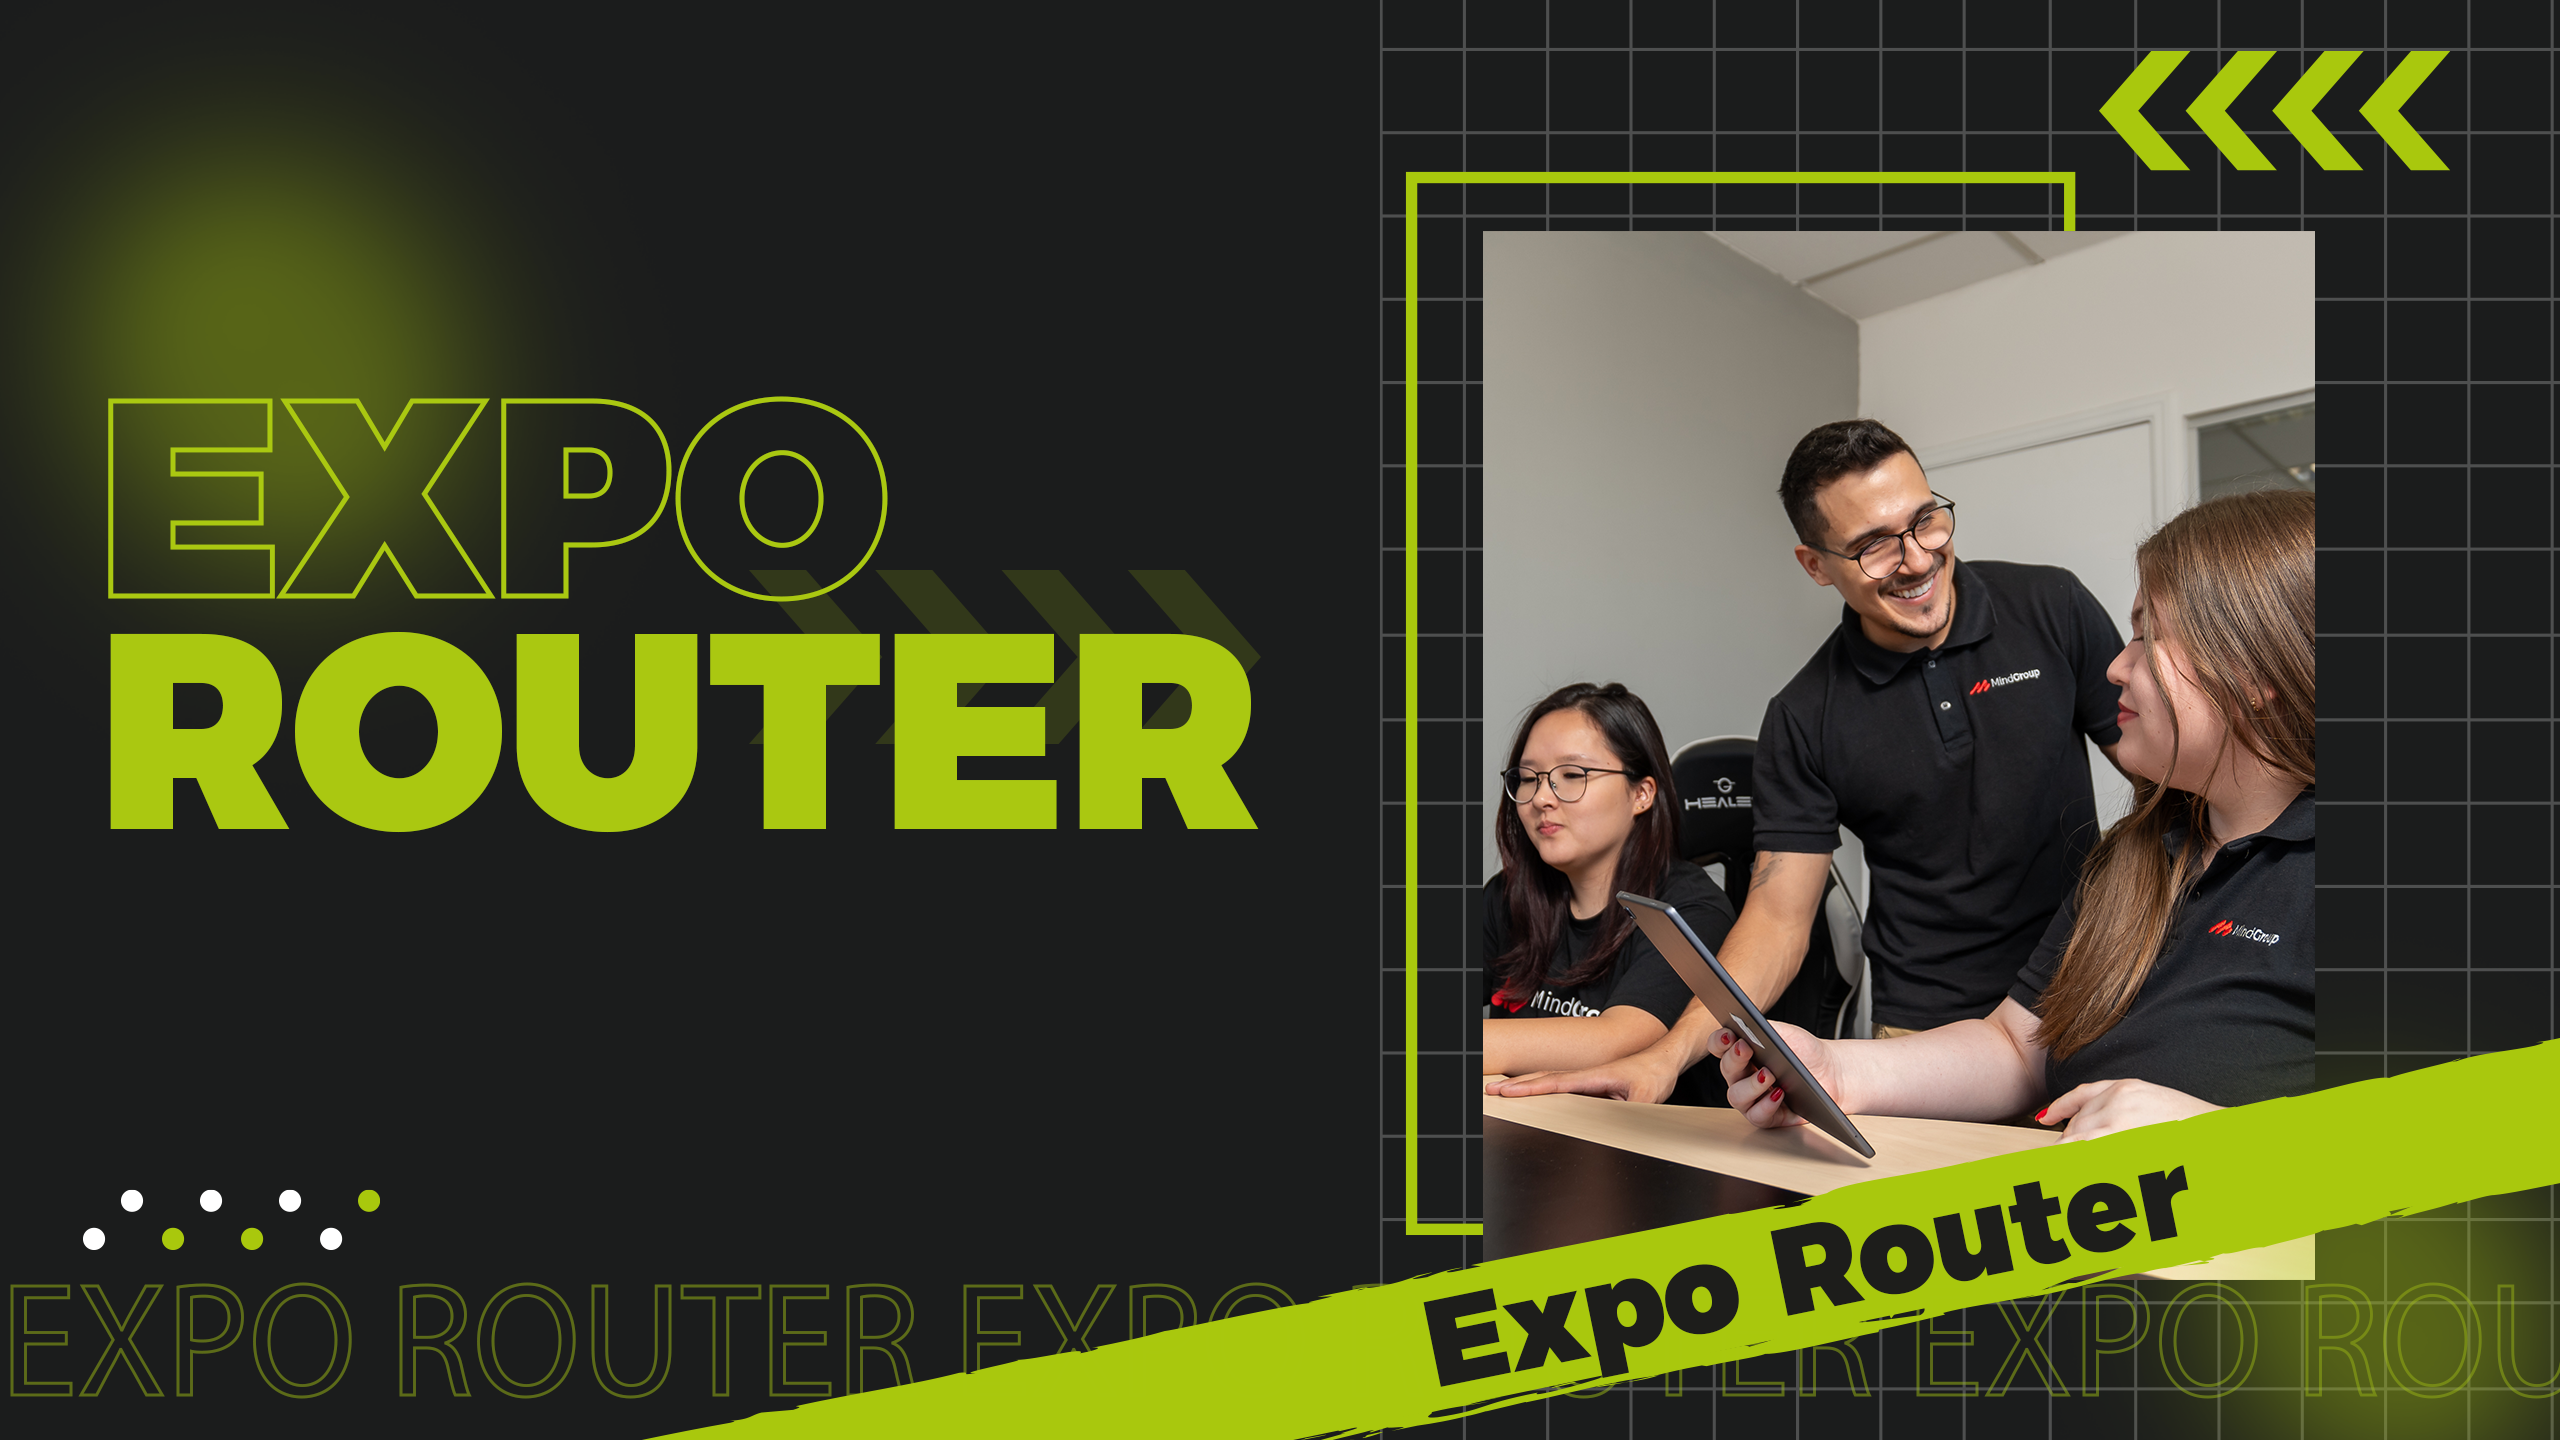 Explorando o Expo Router: Um Mini-Curso Intensivo